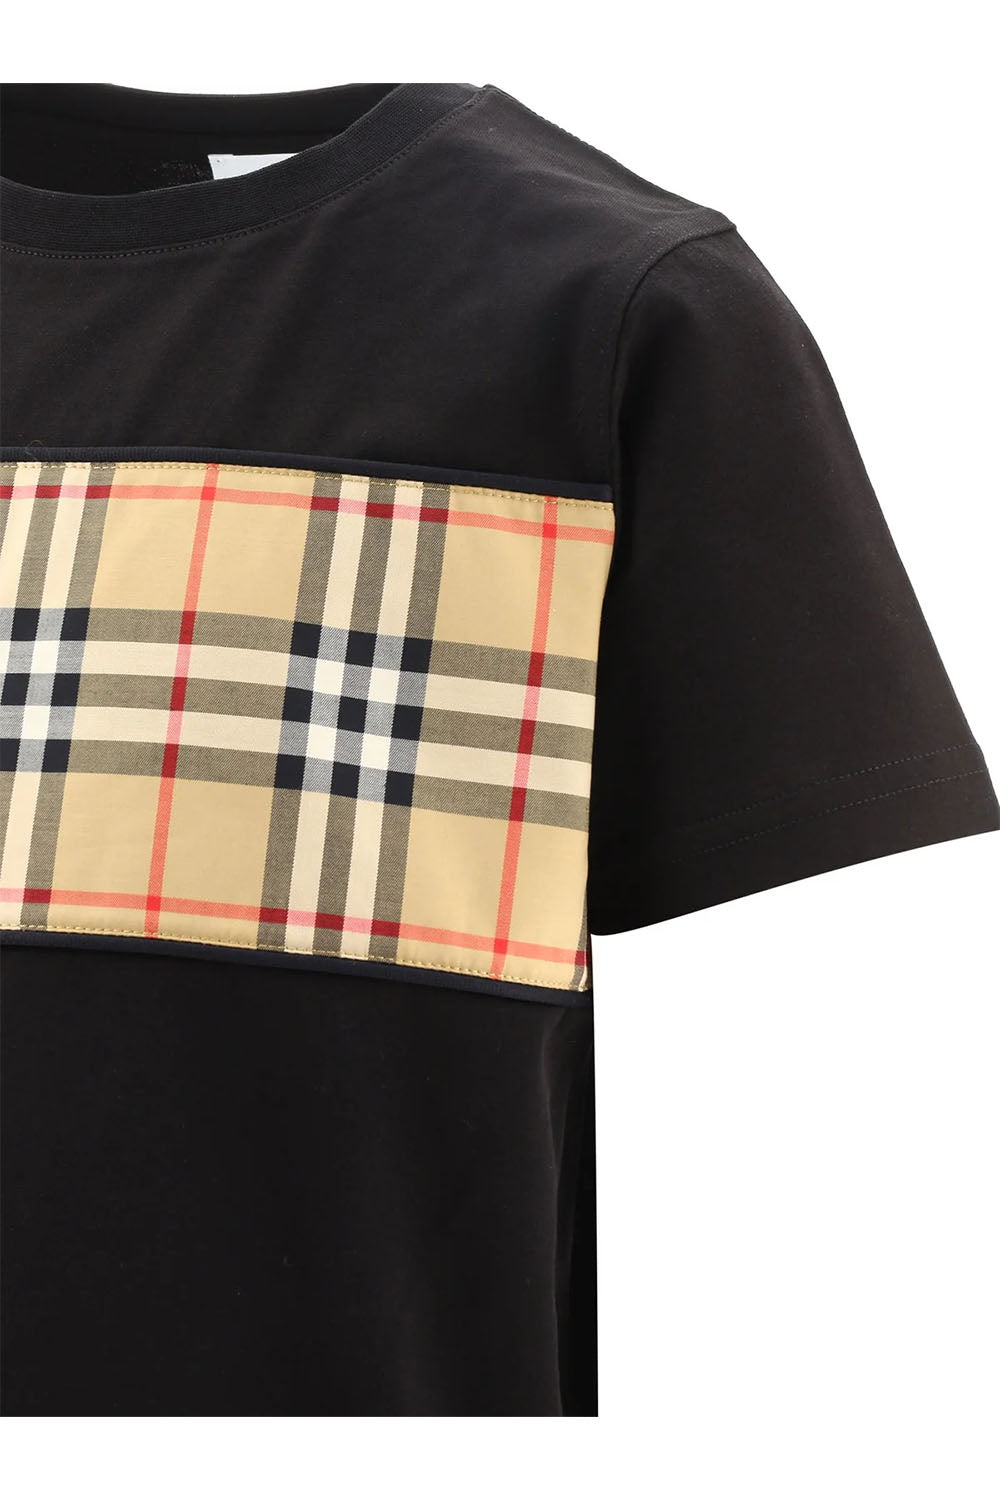 Jerseywear Cedar Check T-Shirt for Boys - Maison7